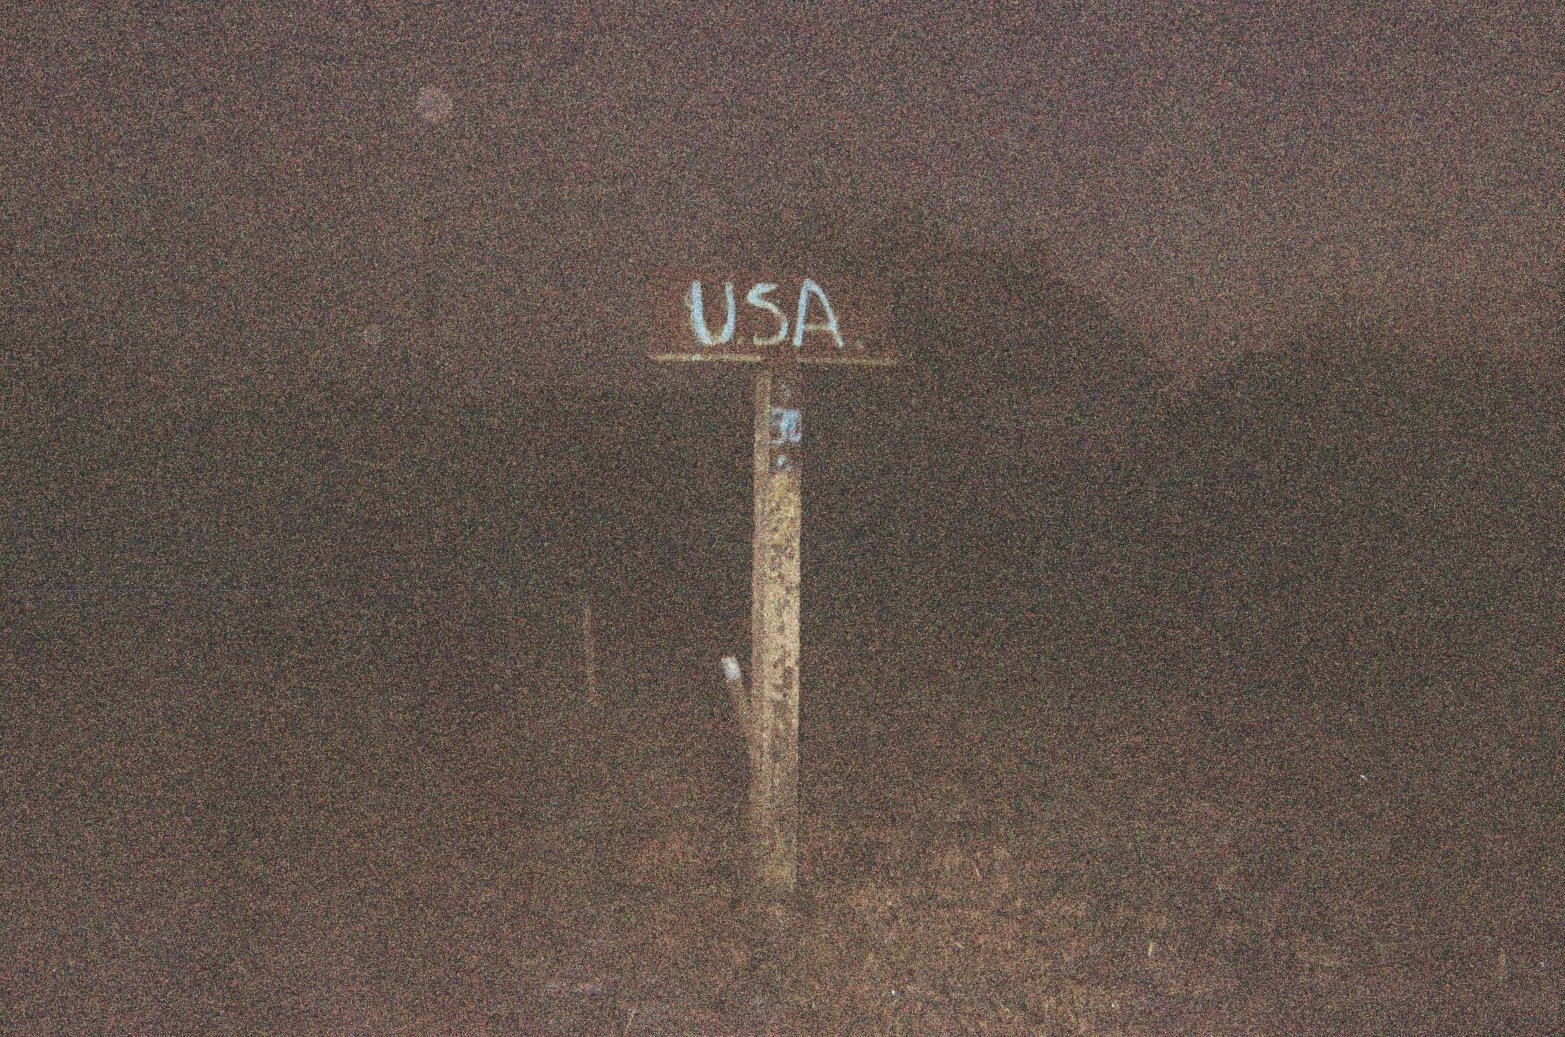 [Kobylin-Kruszewo+USA+sign.JPG]